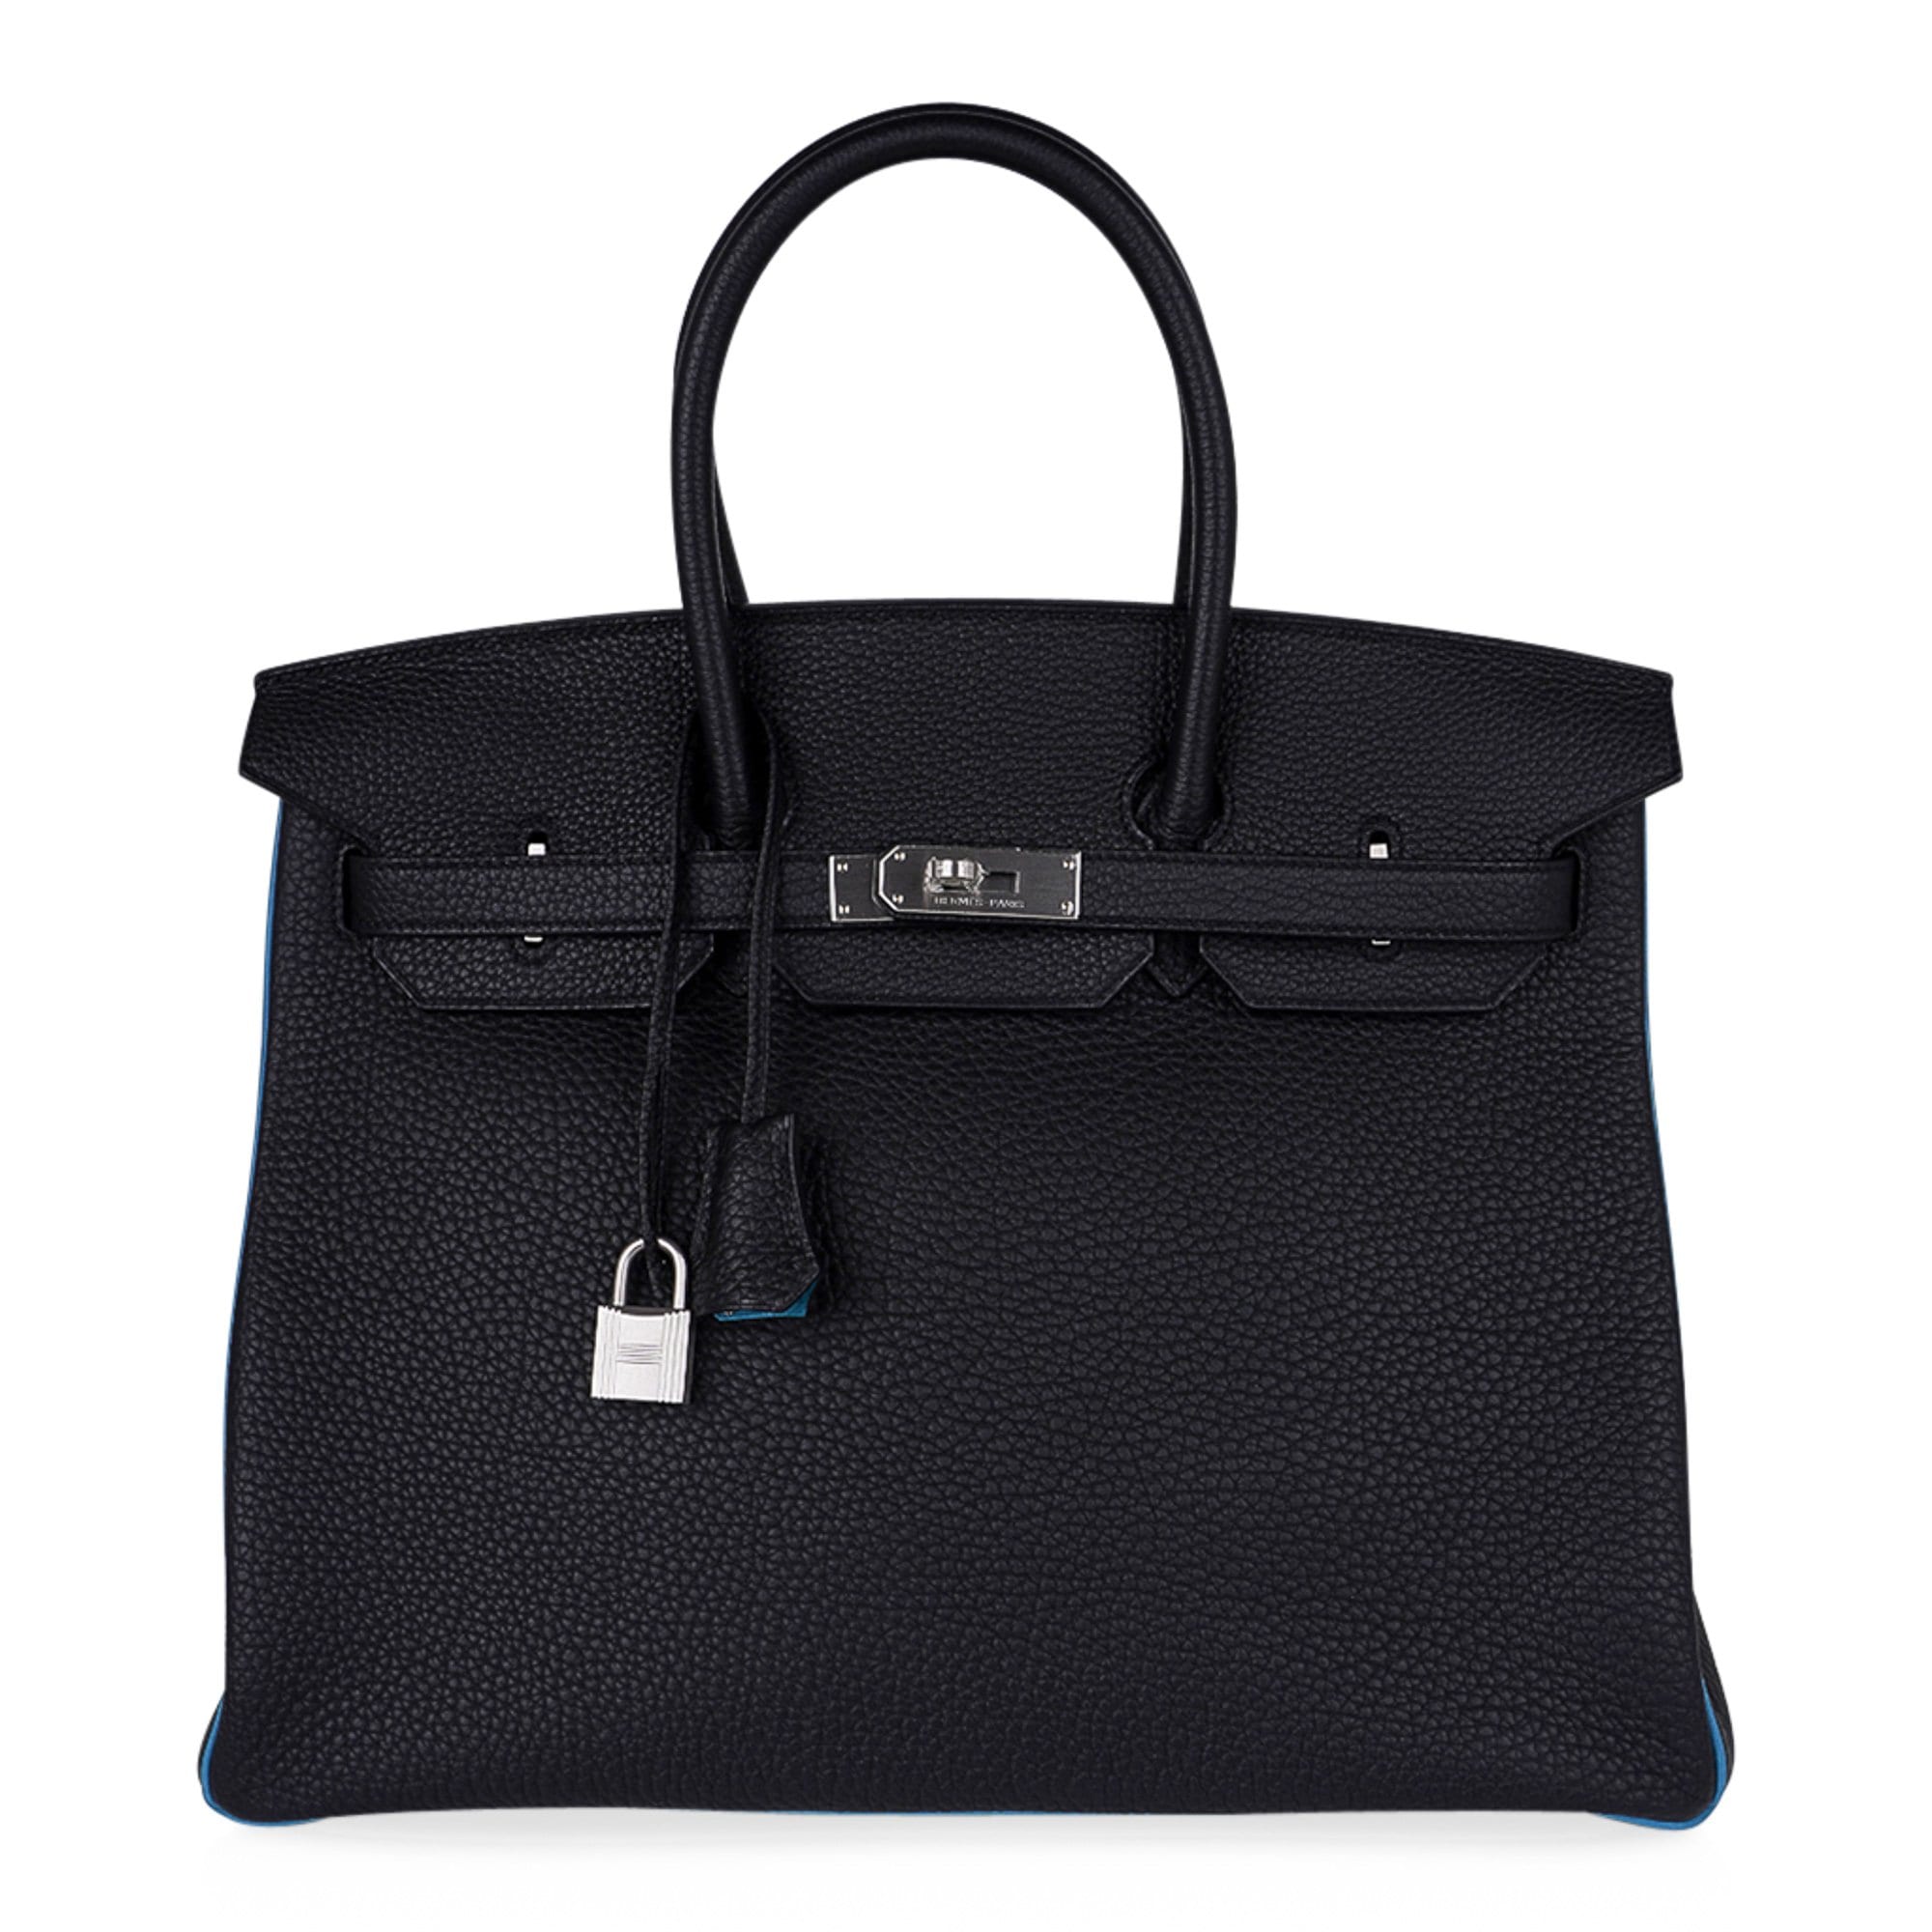 Hermes Birkin Mini Shoulder Bag Togo Leather Palladium Hardware In Grey